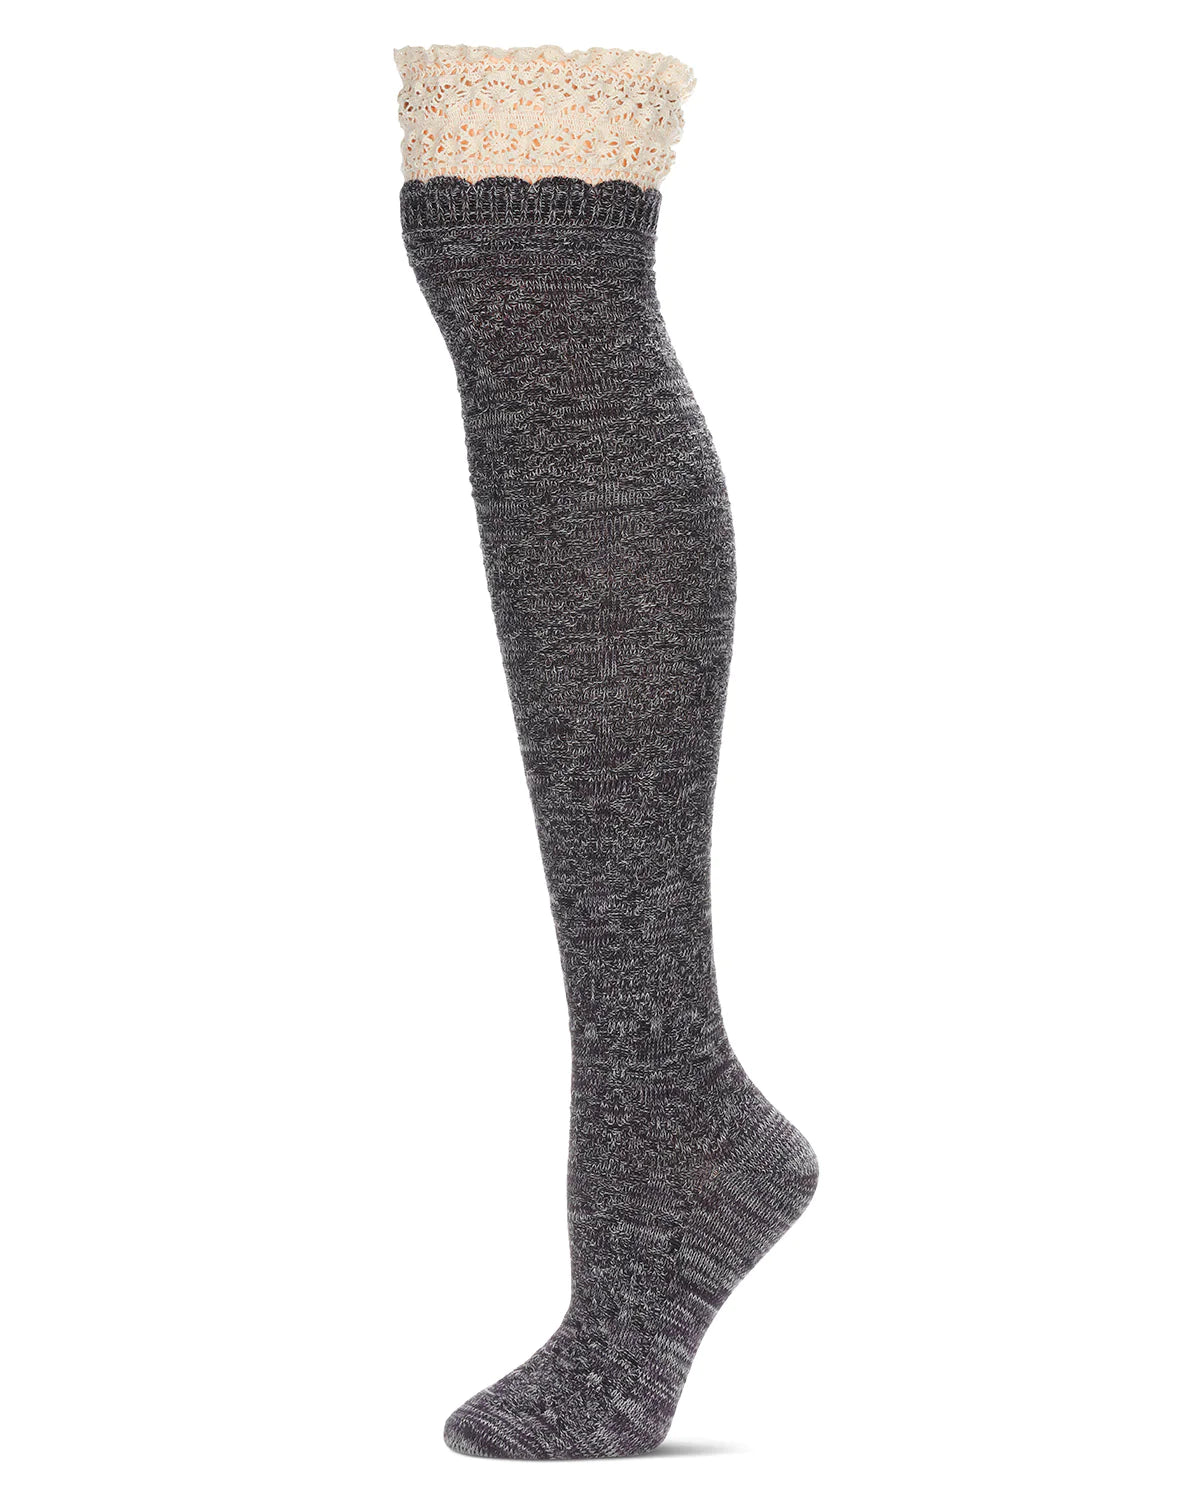 Warped Crochet Women's Over the Knee Socks - The Sockery